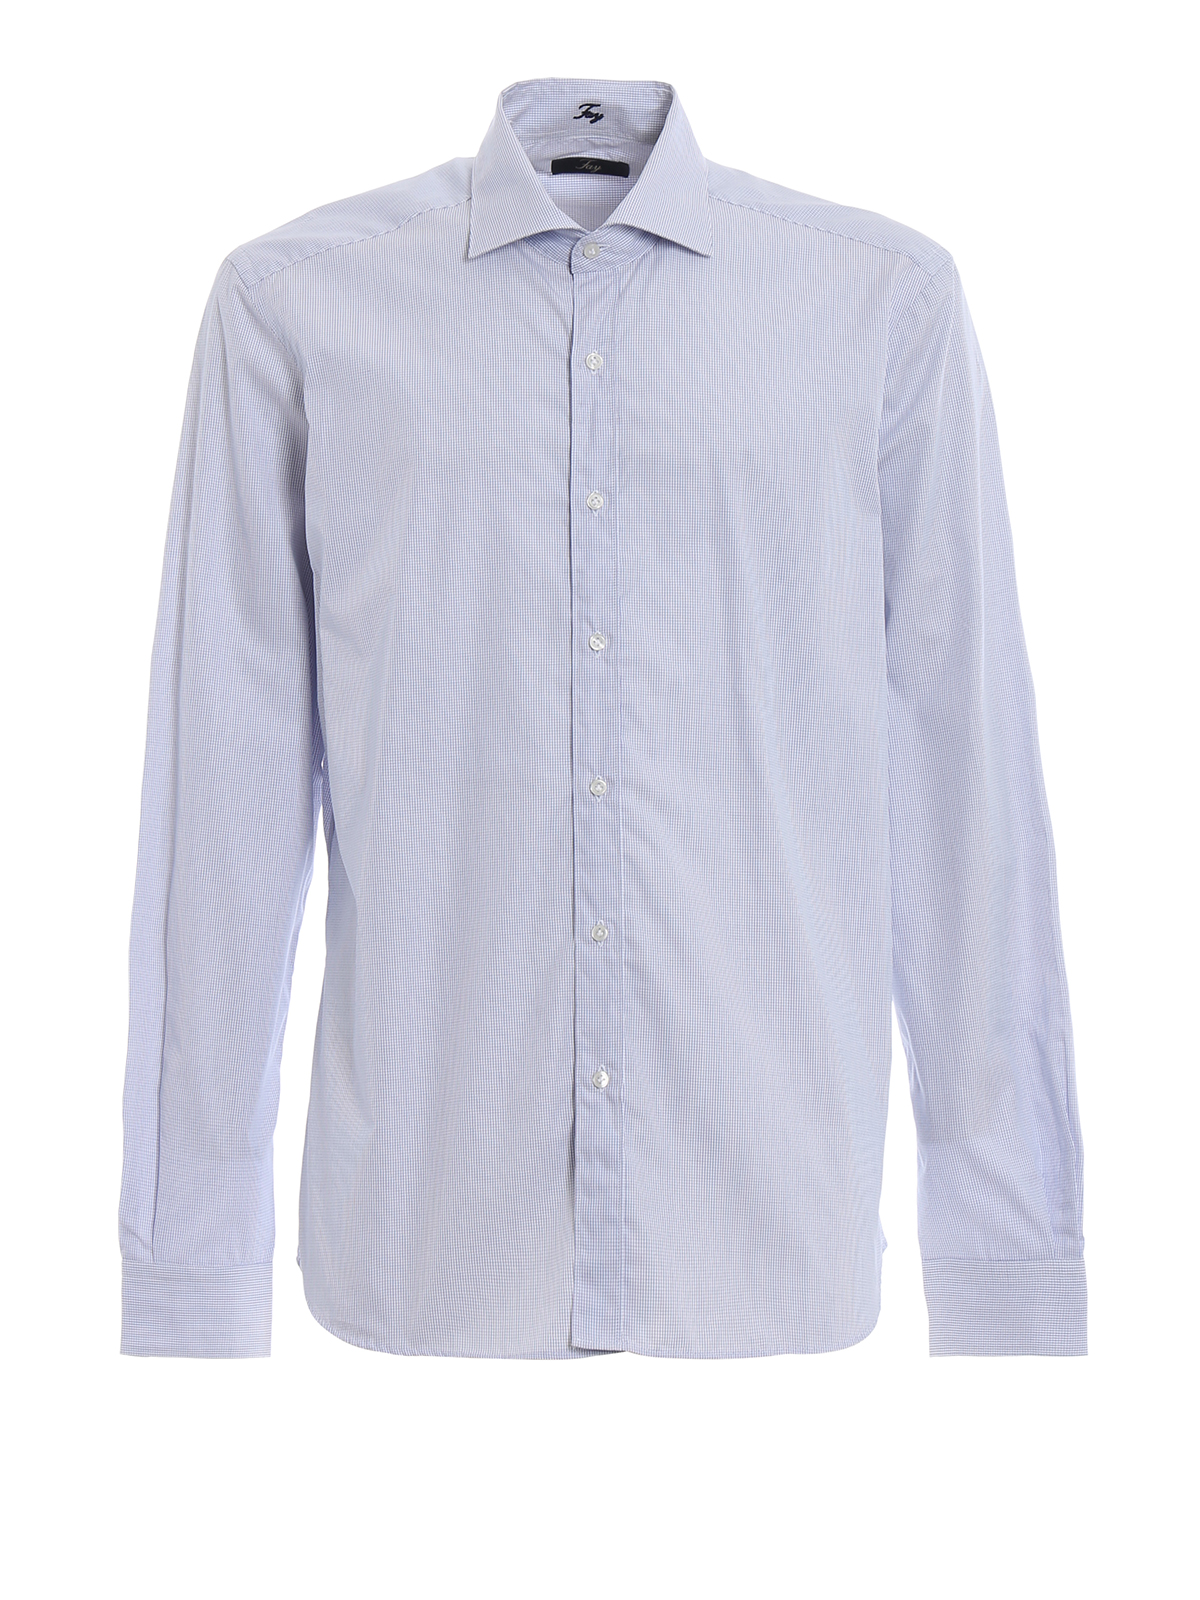 Shirts Fay - Light blue micro check cotton shirt - NCMA1372590C52U601